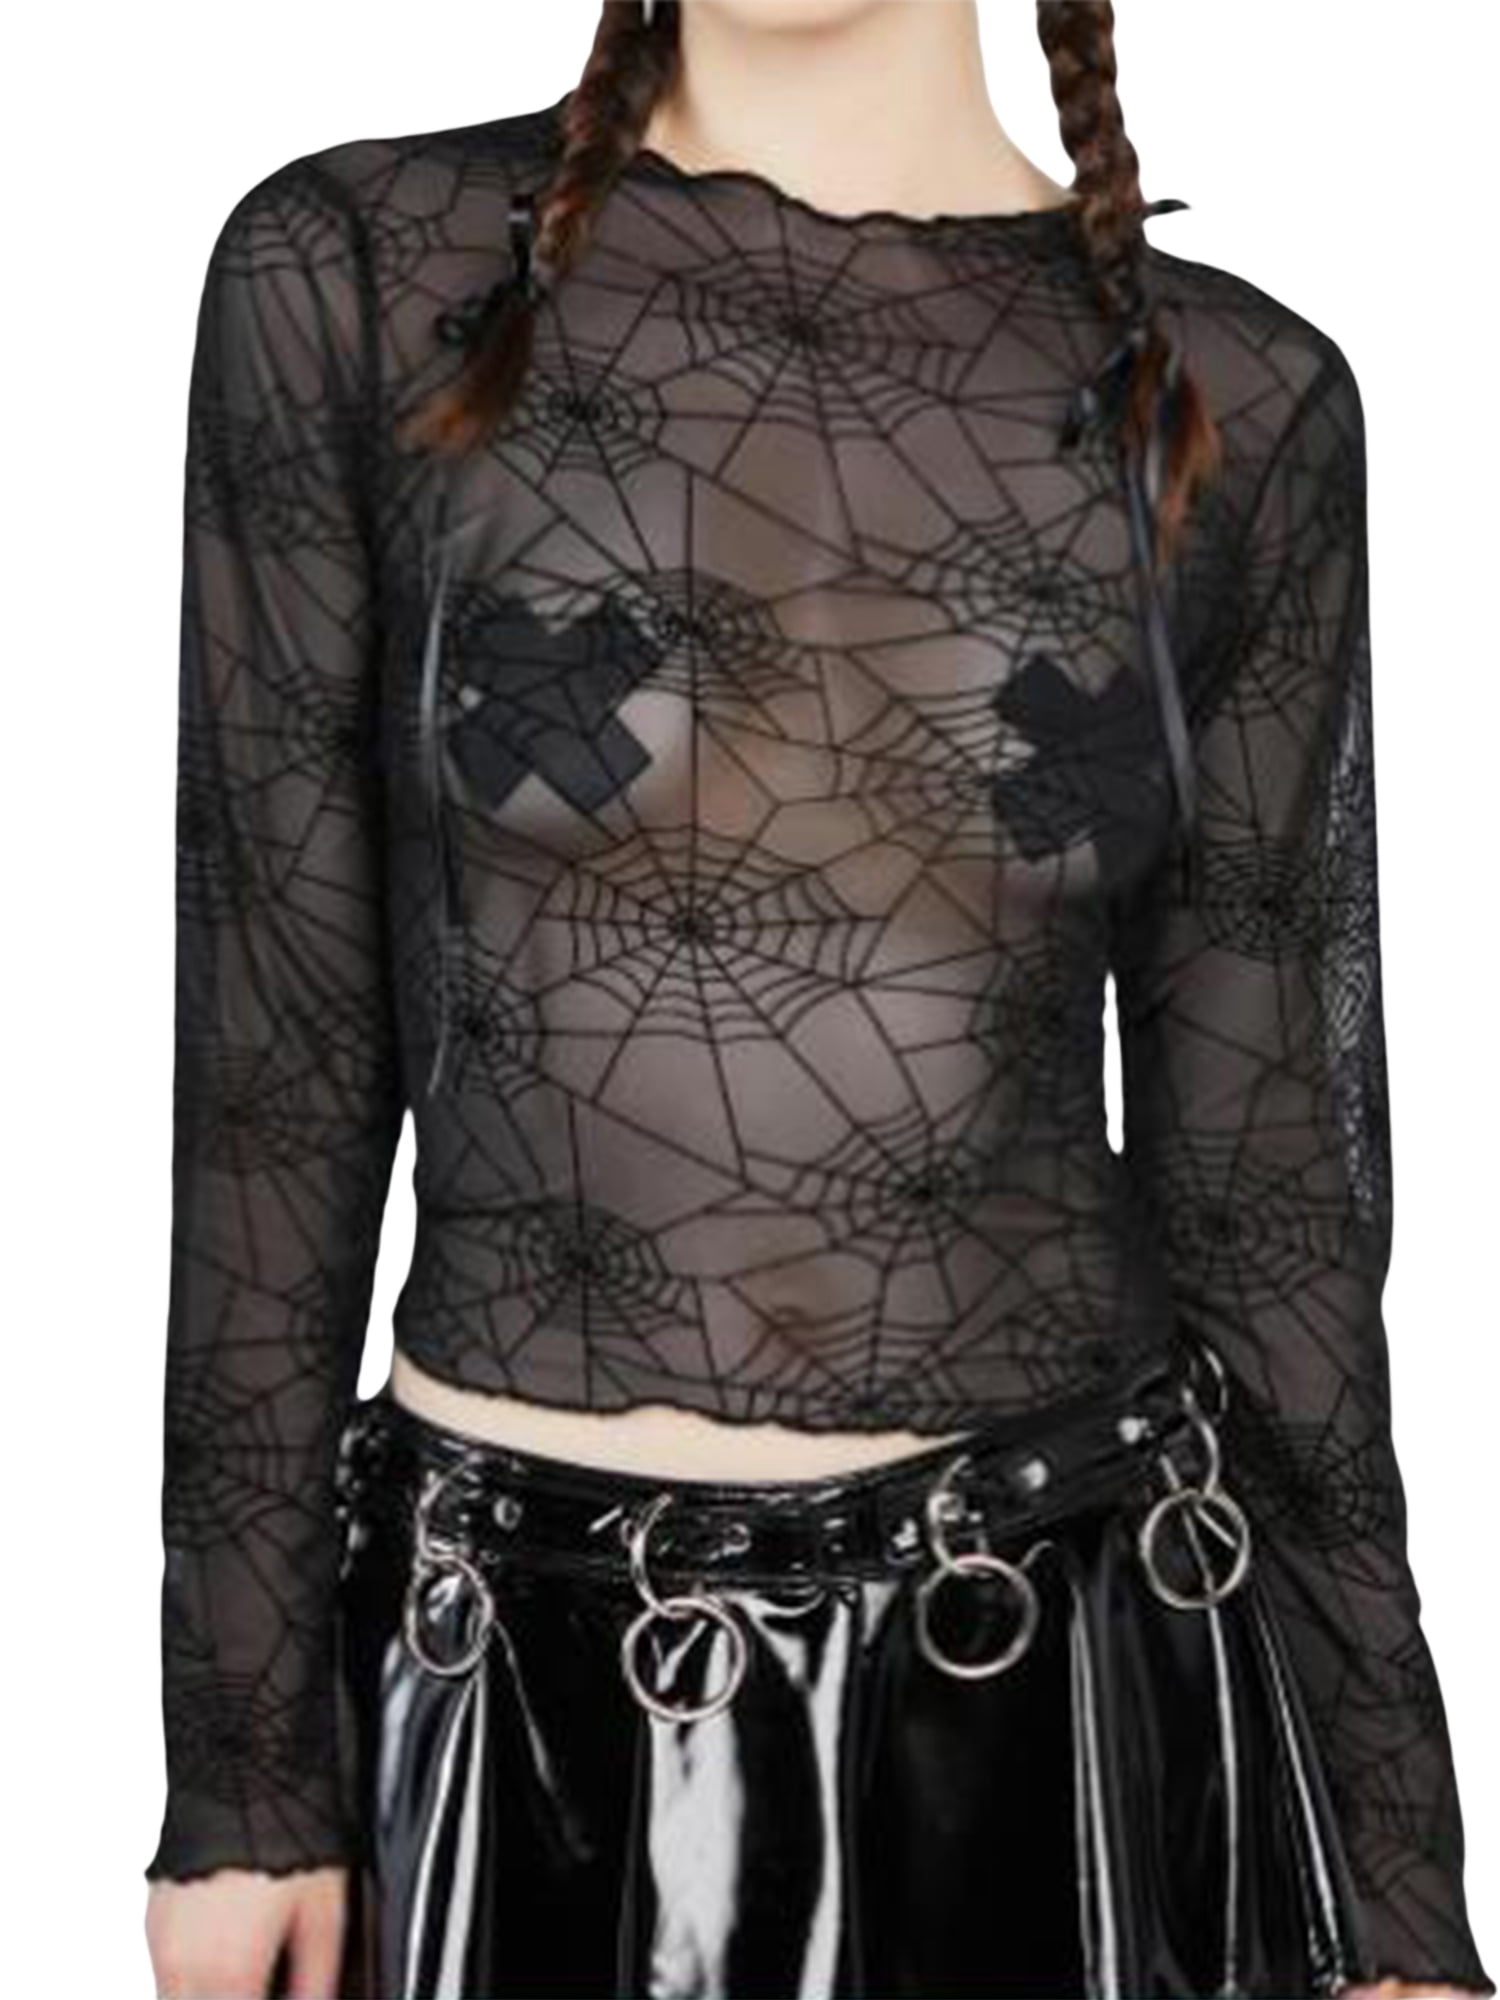 Sunisery Women's Sheer Mesh Top Grunge Y2K Top Long Sleeve Crew Neck Spider  Web Print T-Shirt Black 